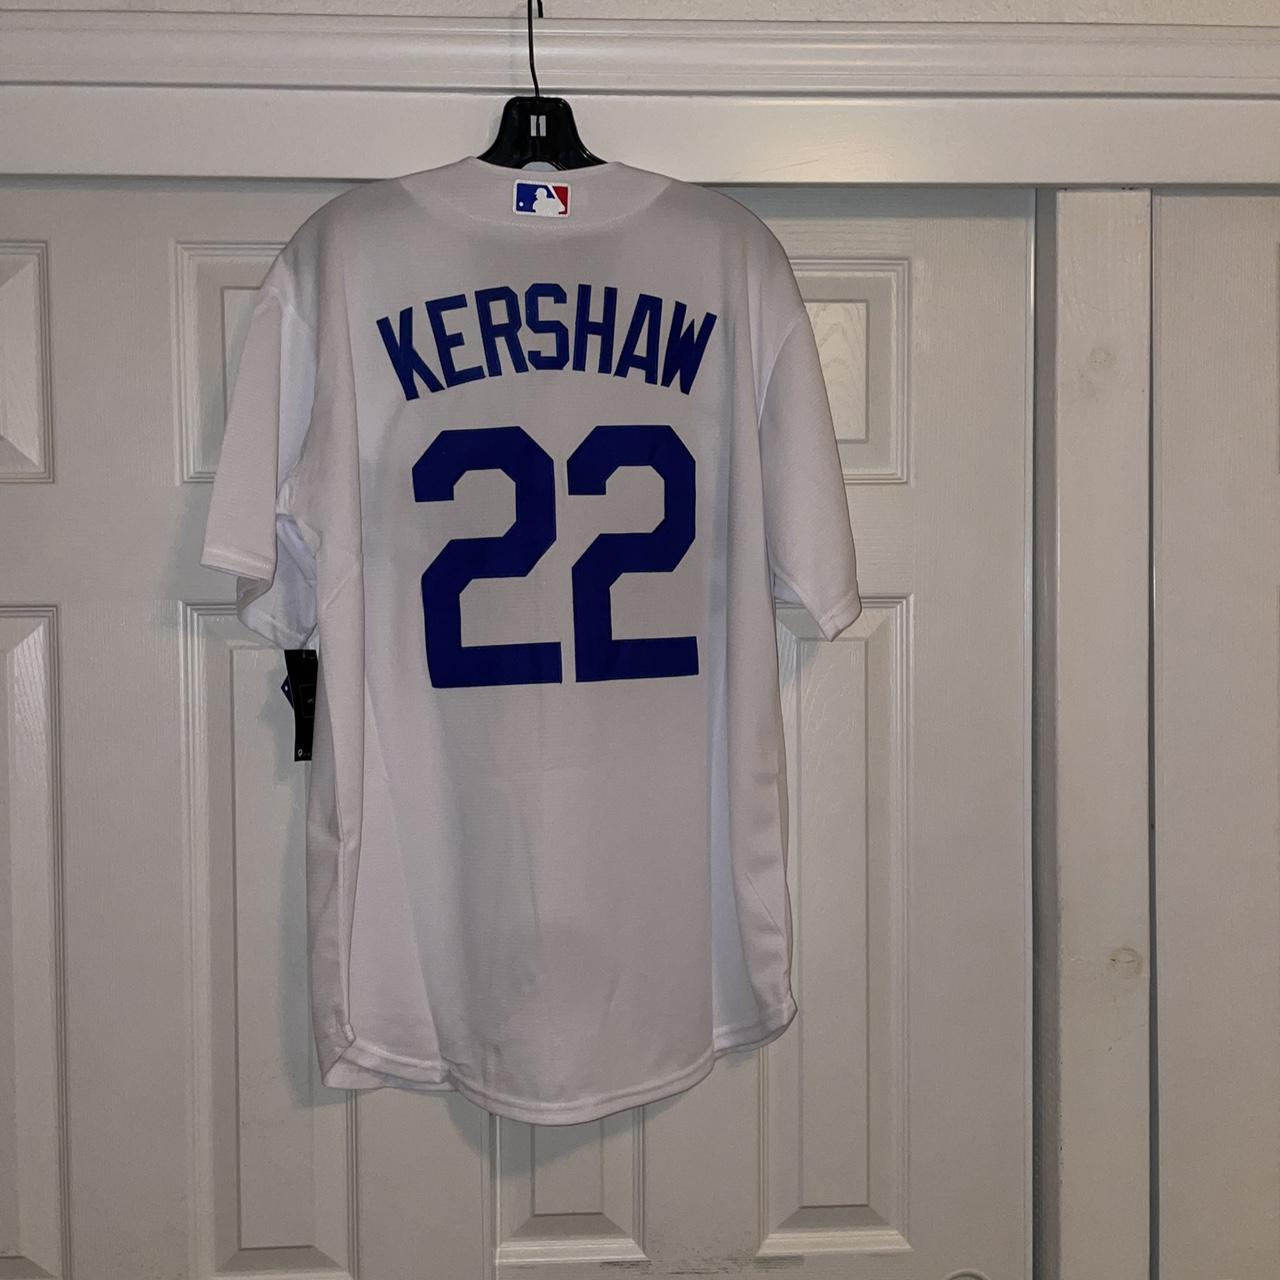 Youth Medium Los Angeles Dodgers Clayton Kershaw Jersey - Depop